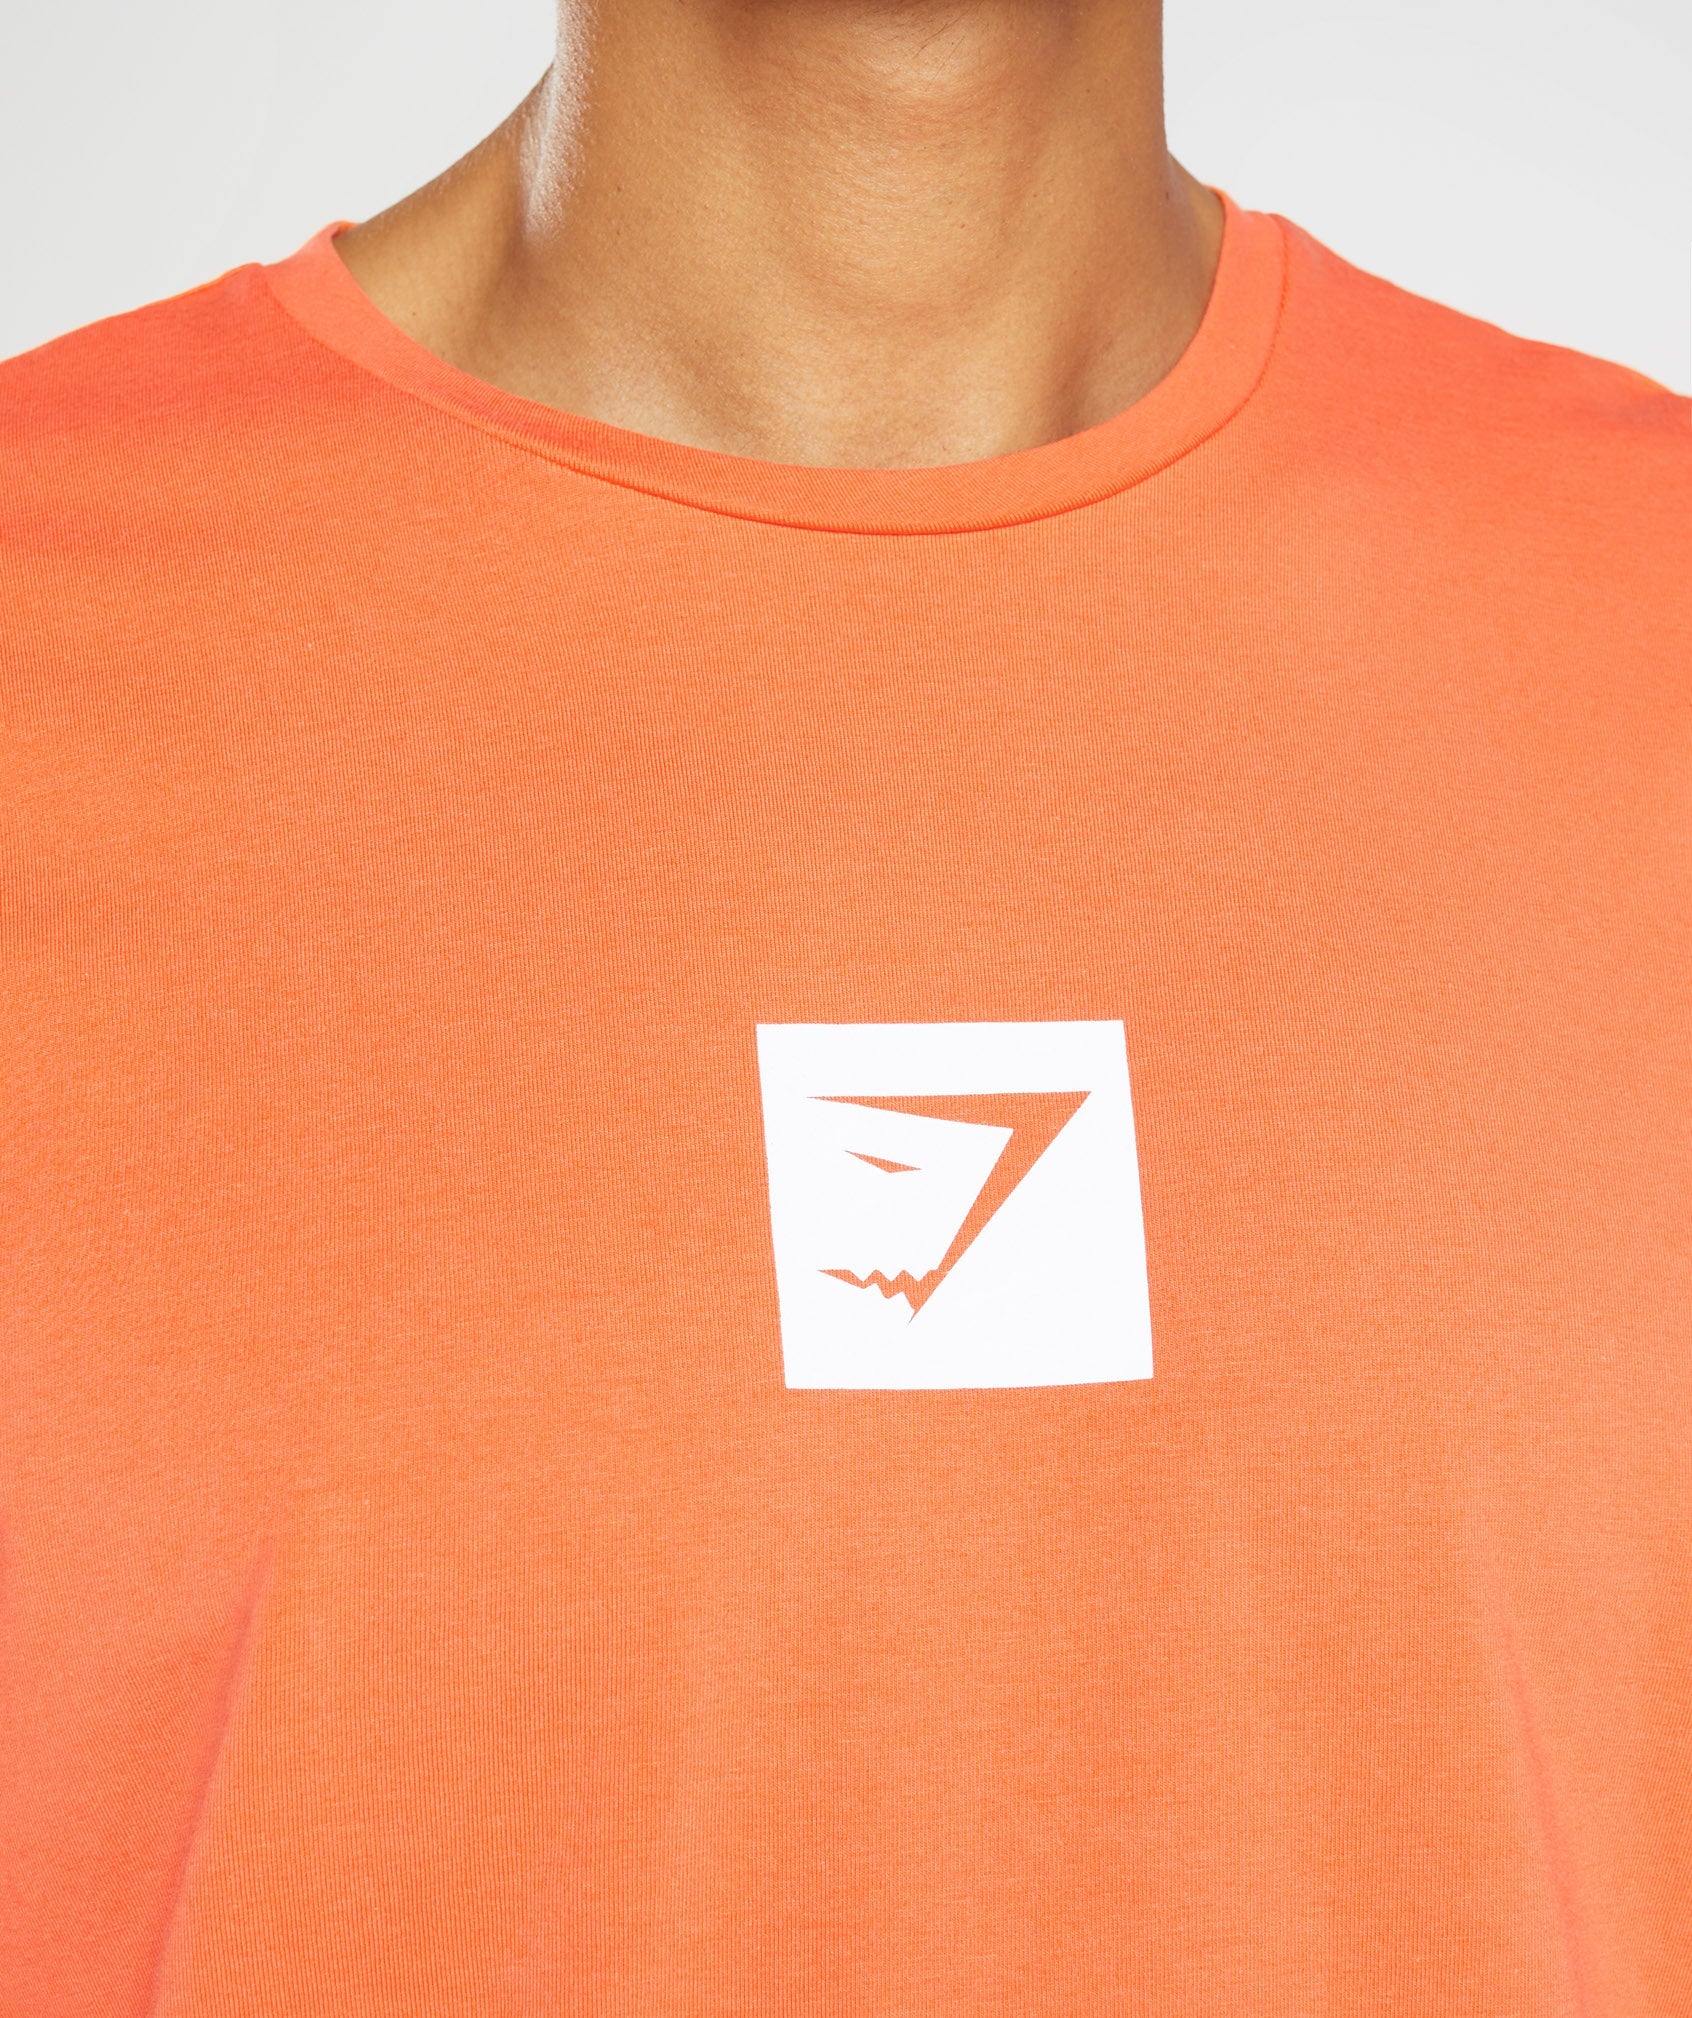 Outline T-Shirt in Zesty Orange - view 3